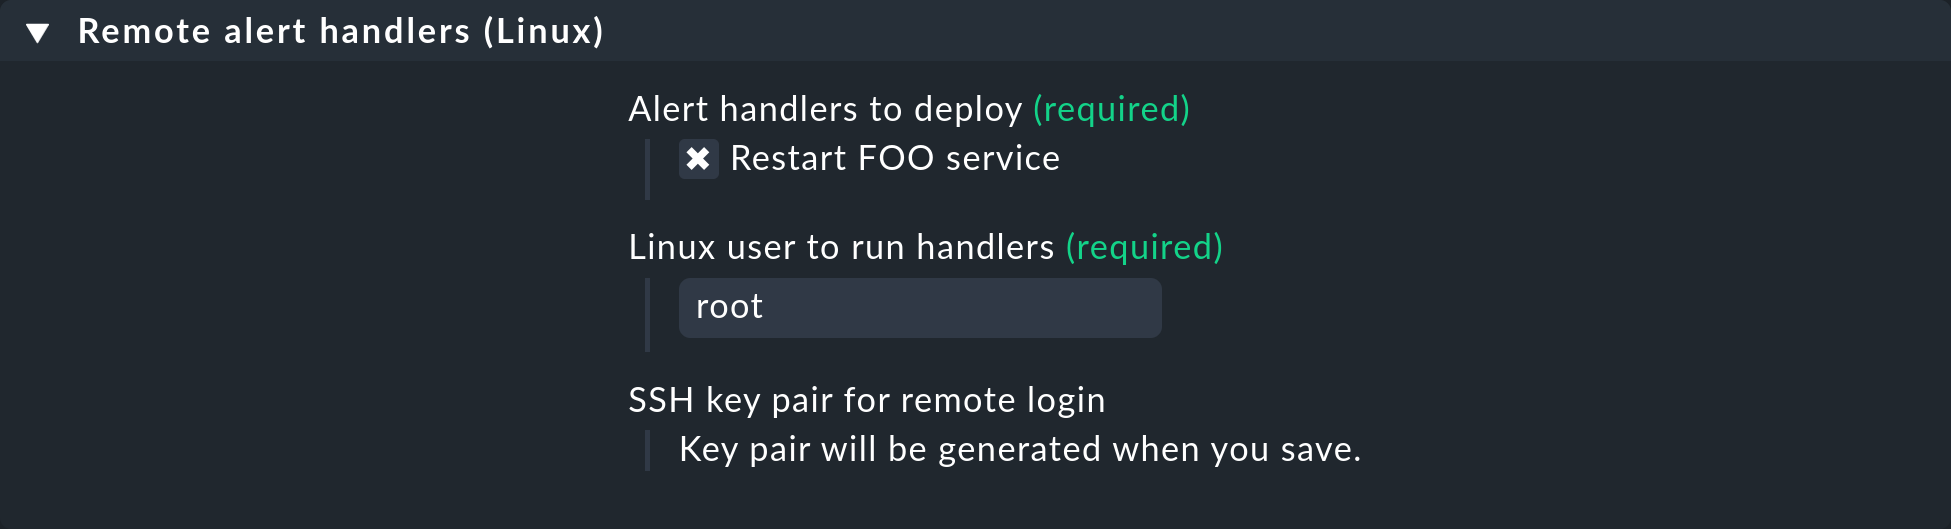 alert handlers install remote